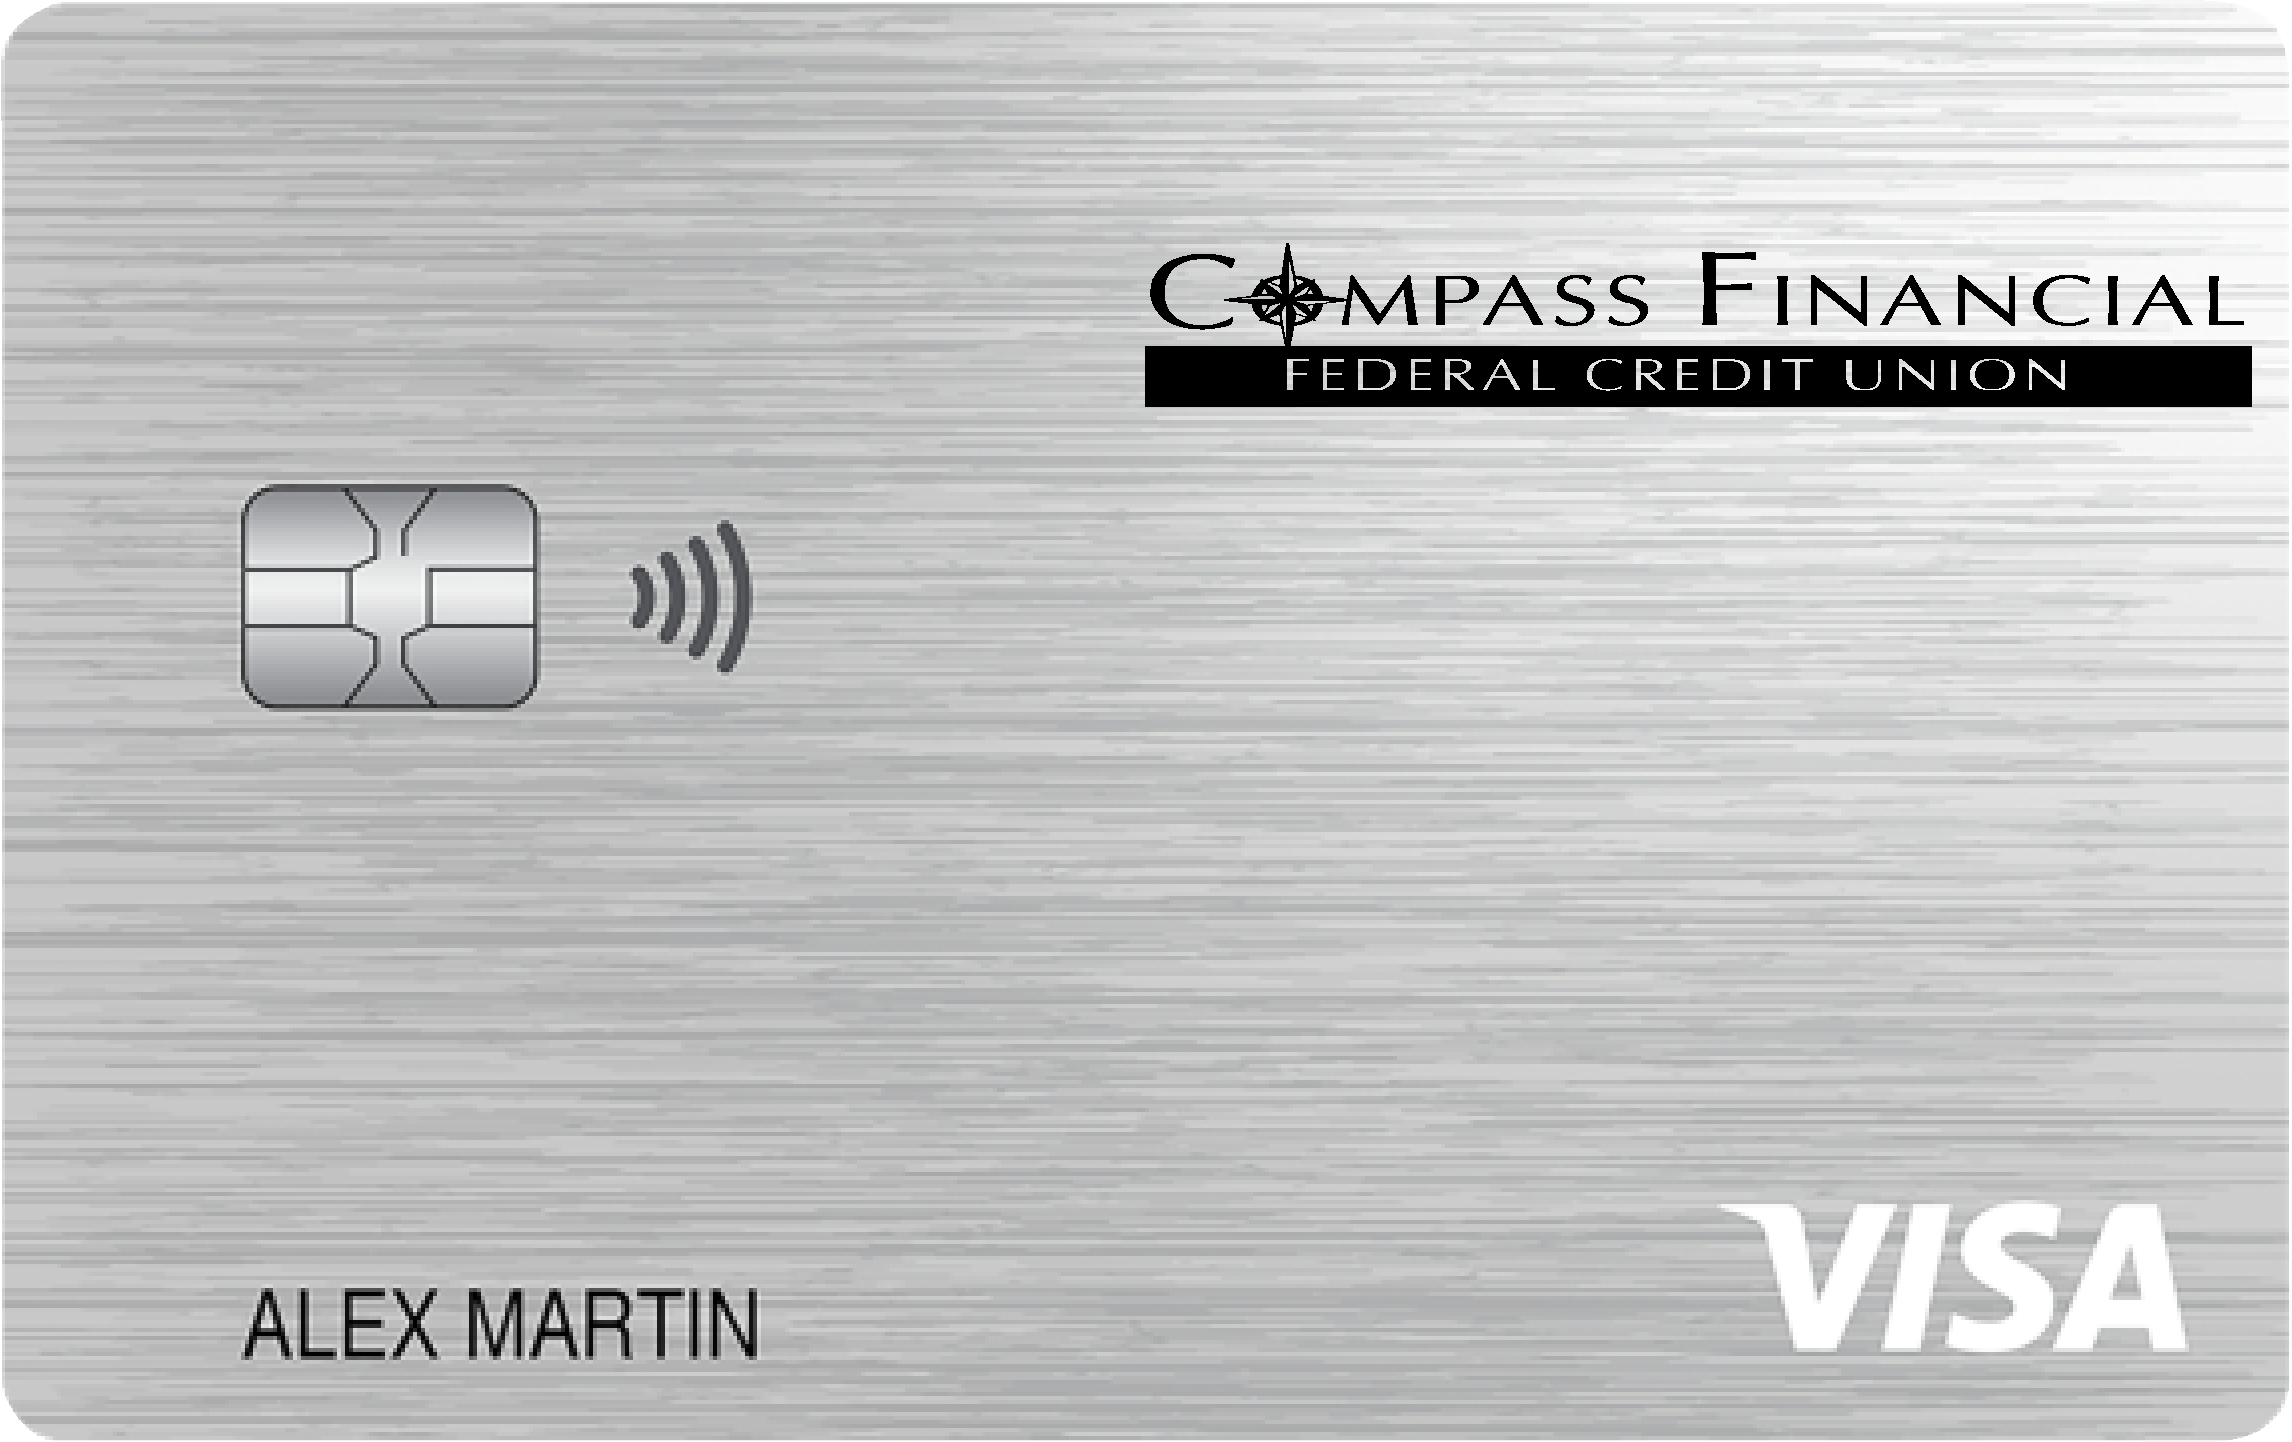 Compass Financial Federal Credit Union Platinum Card